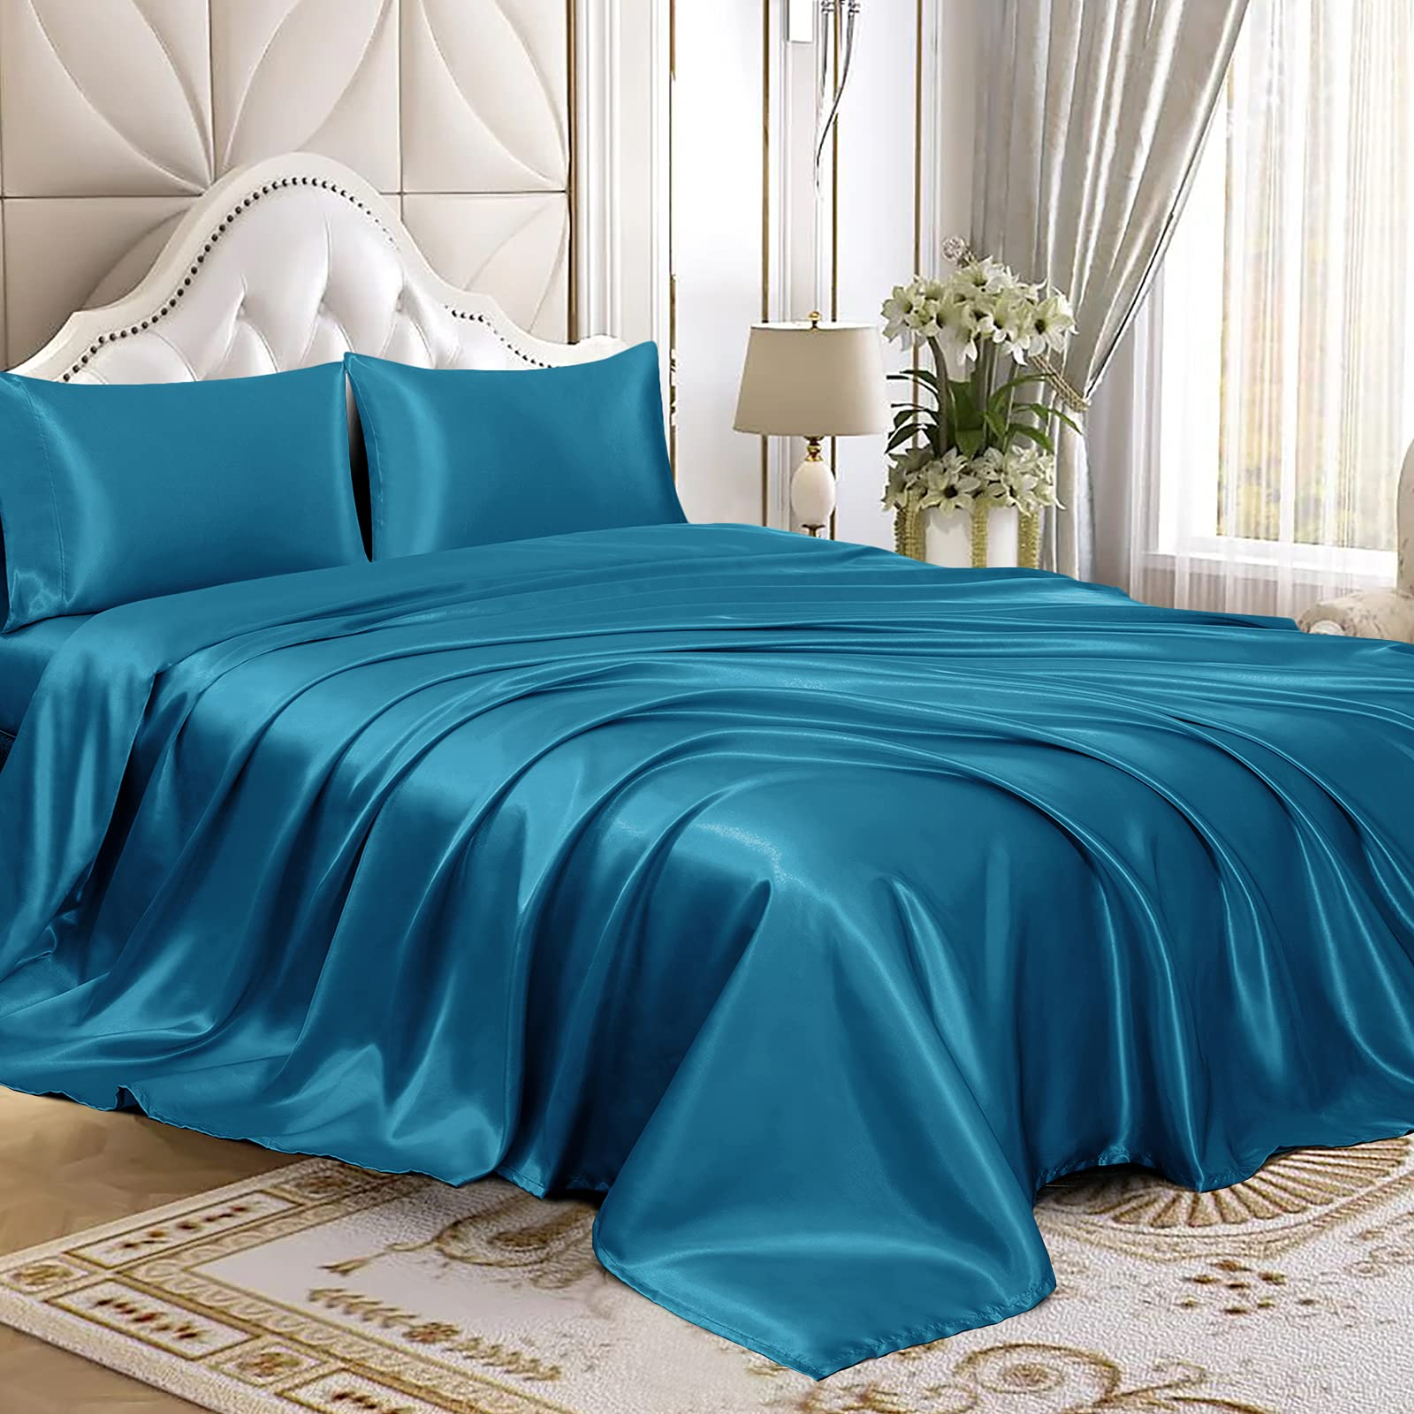 JT013-15 Luxury 4pc Soft Lightweight Bedding Silky Satin Sheet Set with Pillowcases
